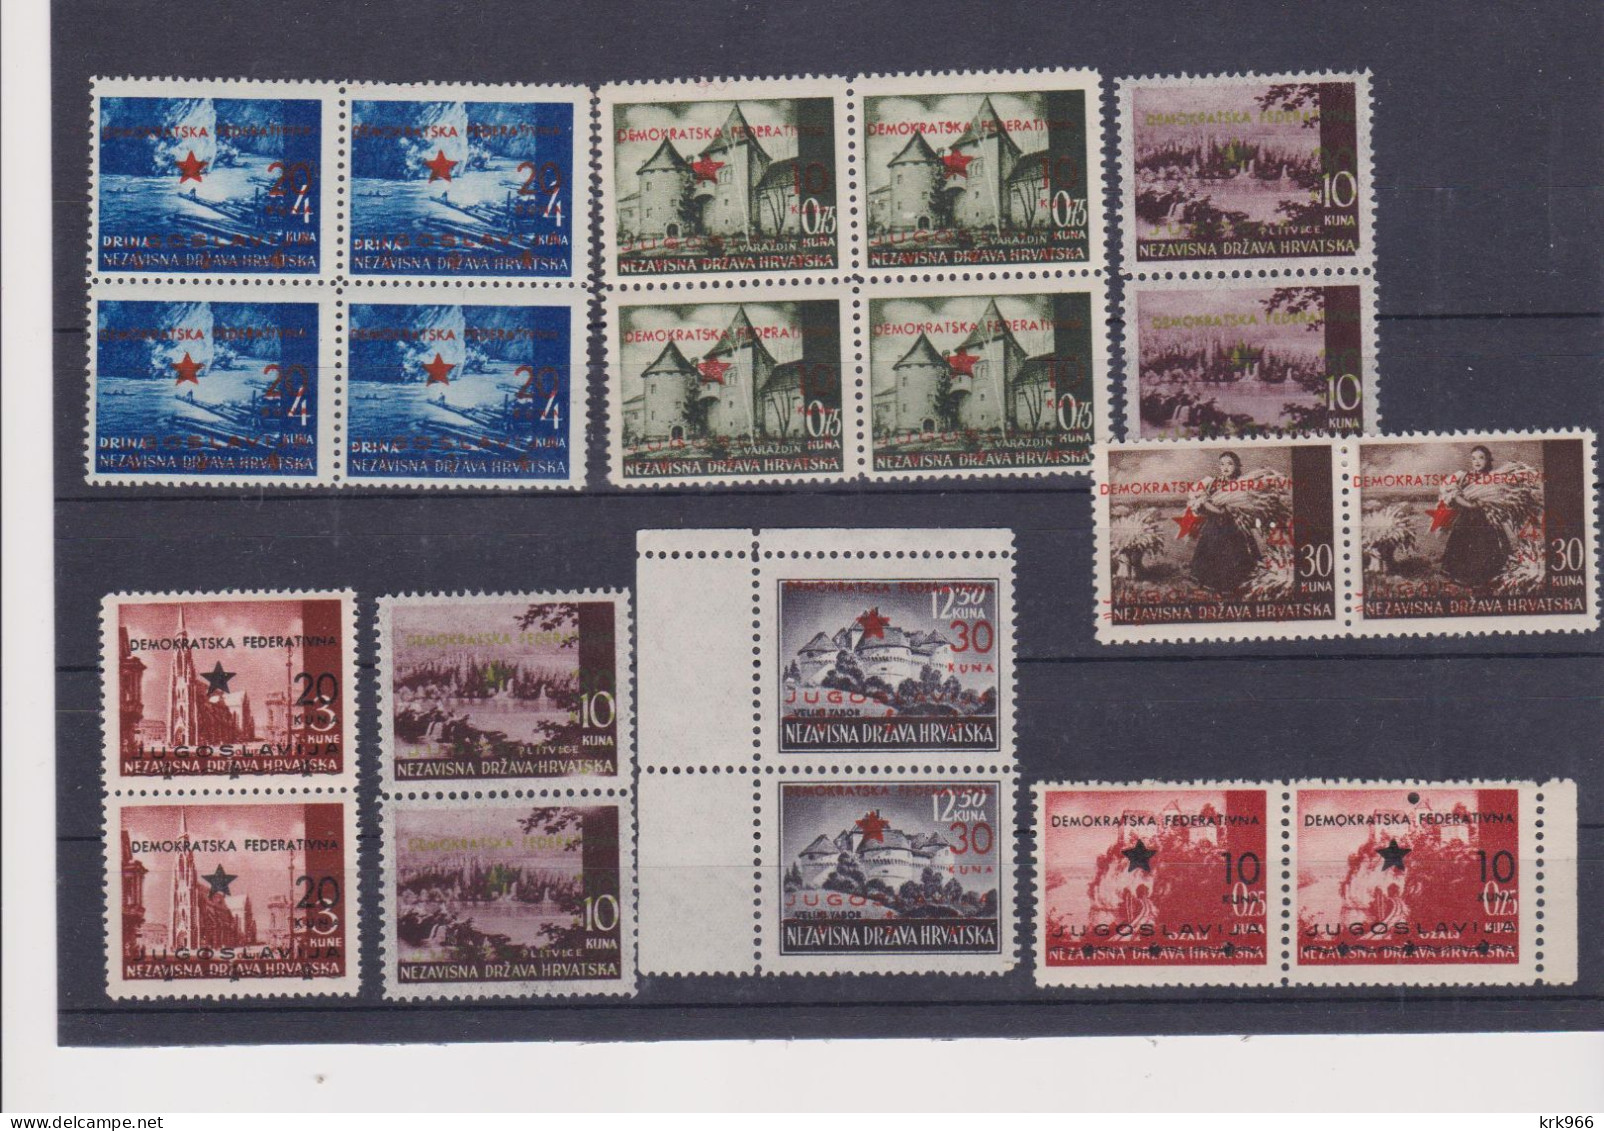 YUGOSLAVIA,1945 CROATIA SPLIT ISSUE Stamps Lot MNH - Unused Stamps